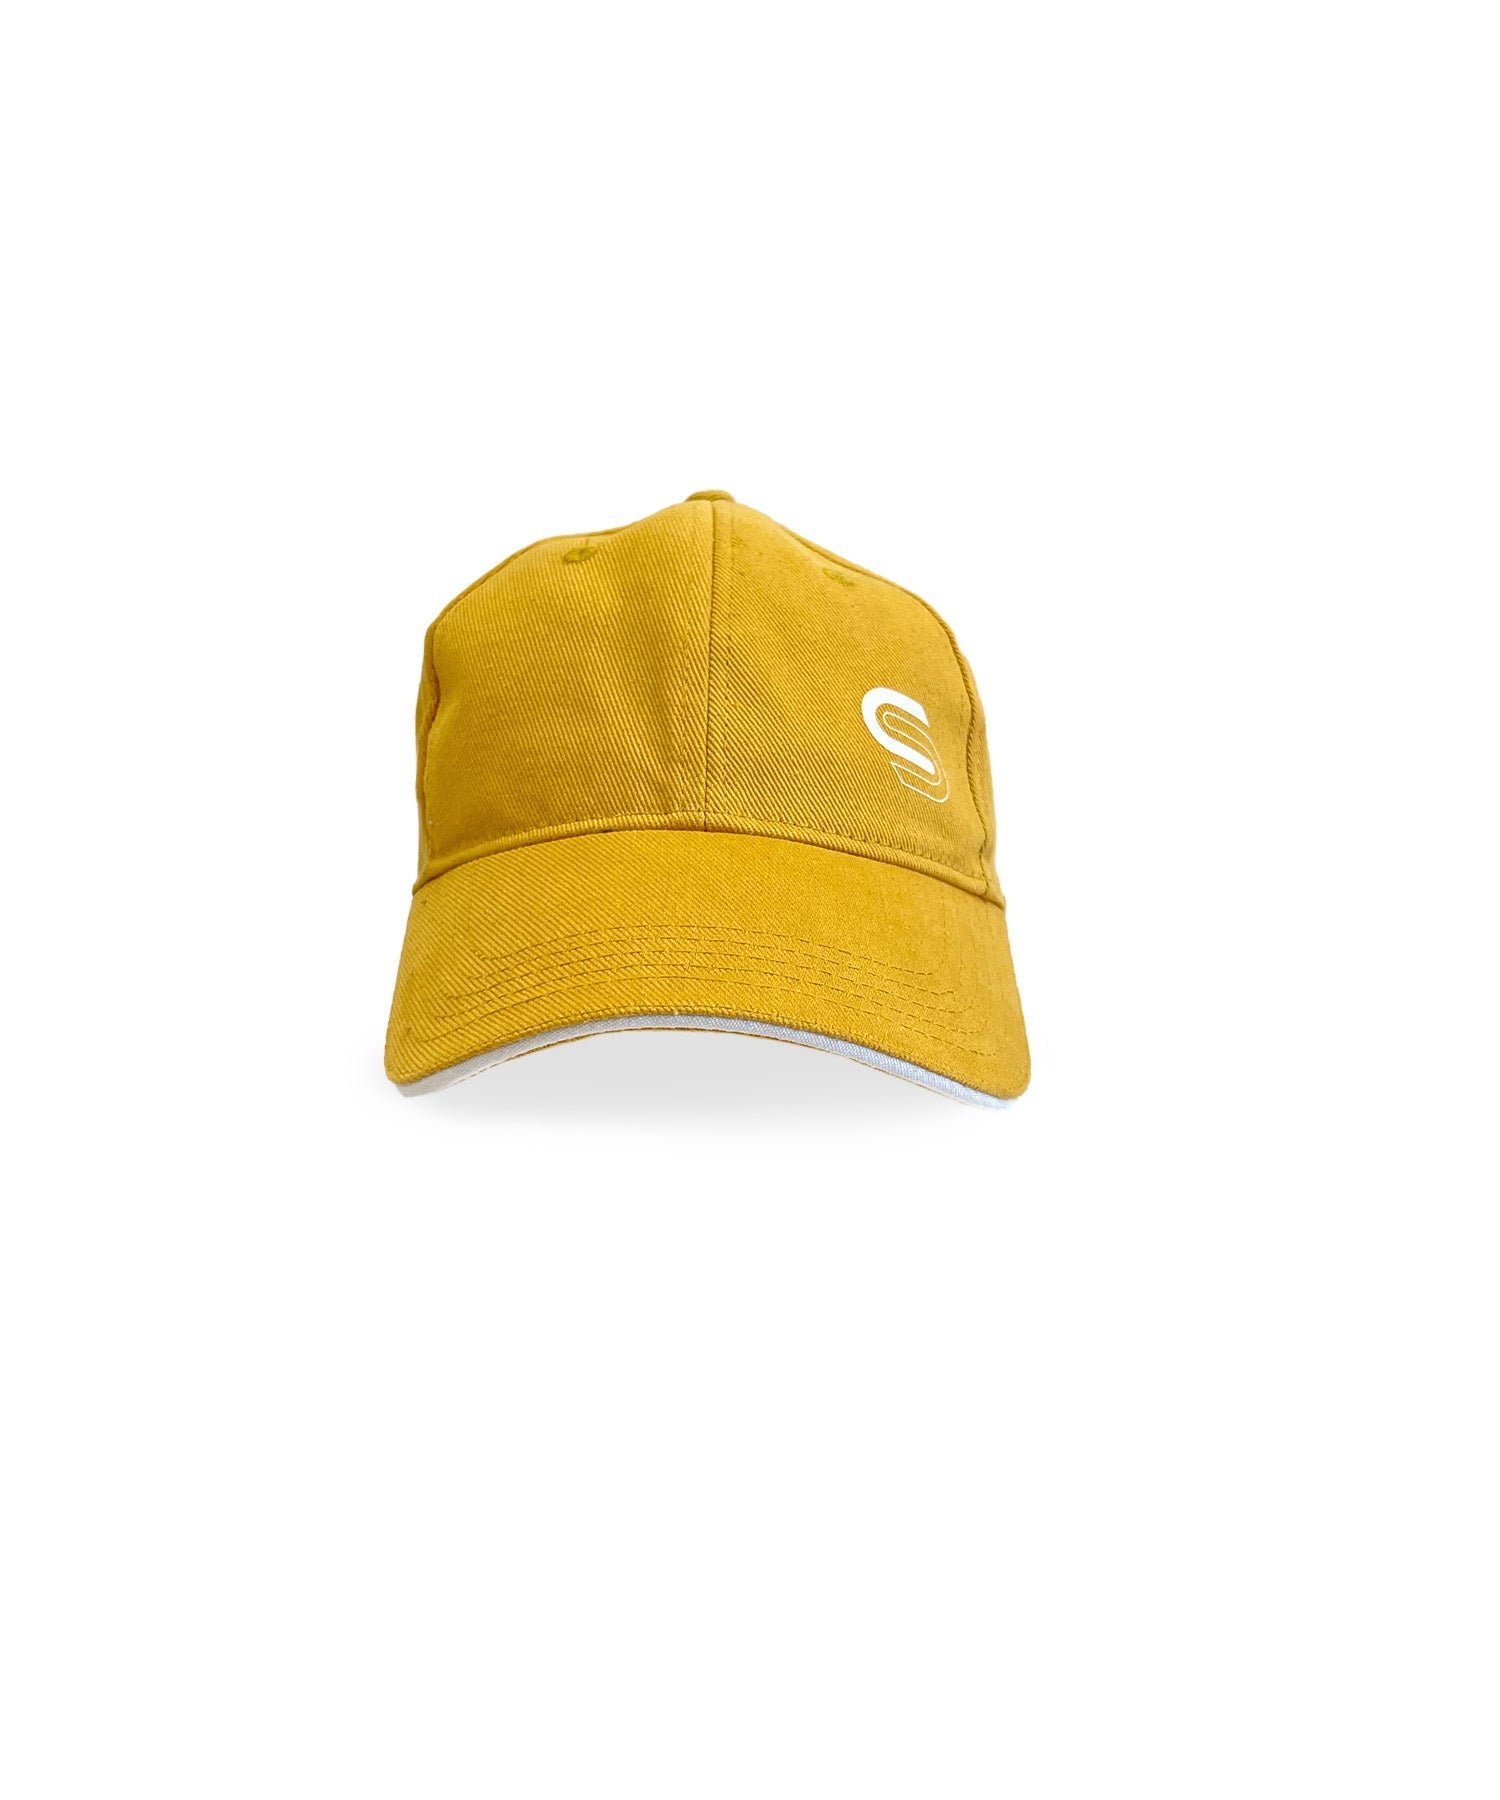 Fearless Cap - Hats